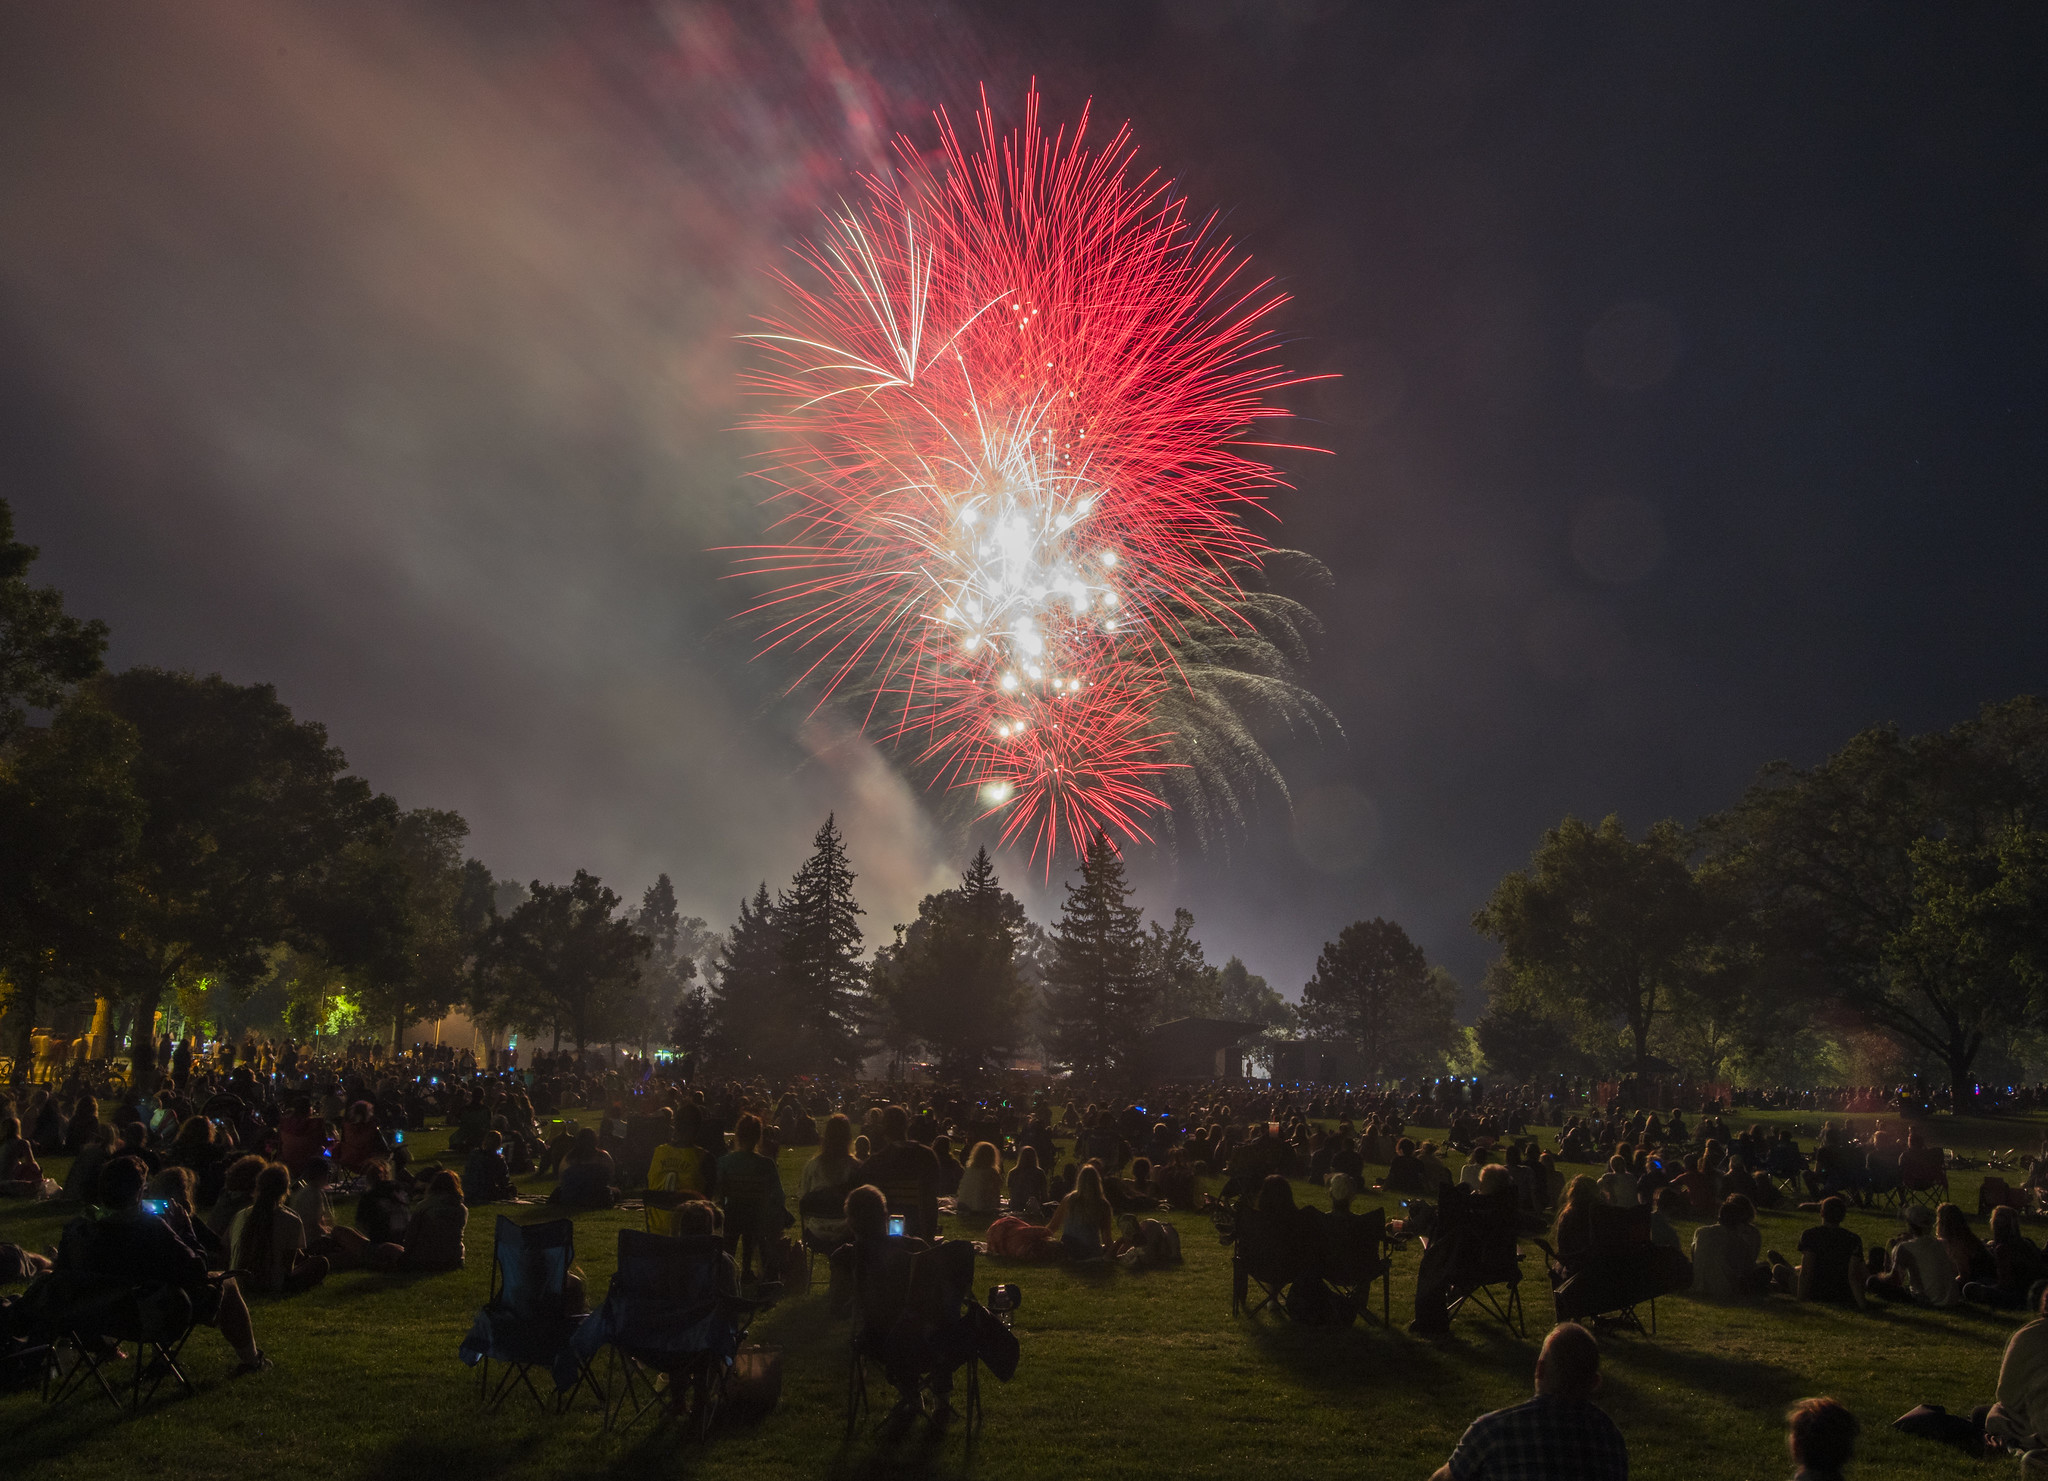 Fireworks display over City Park